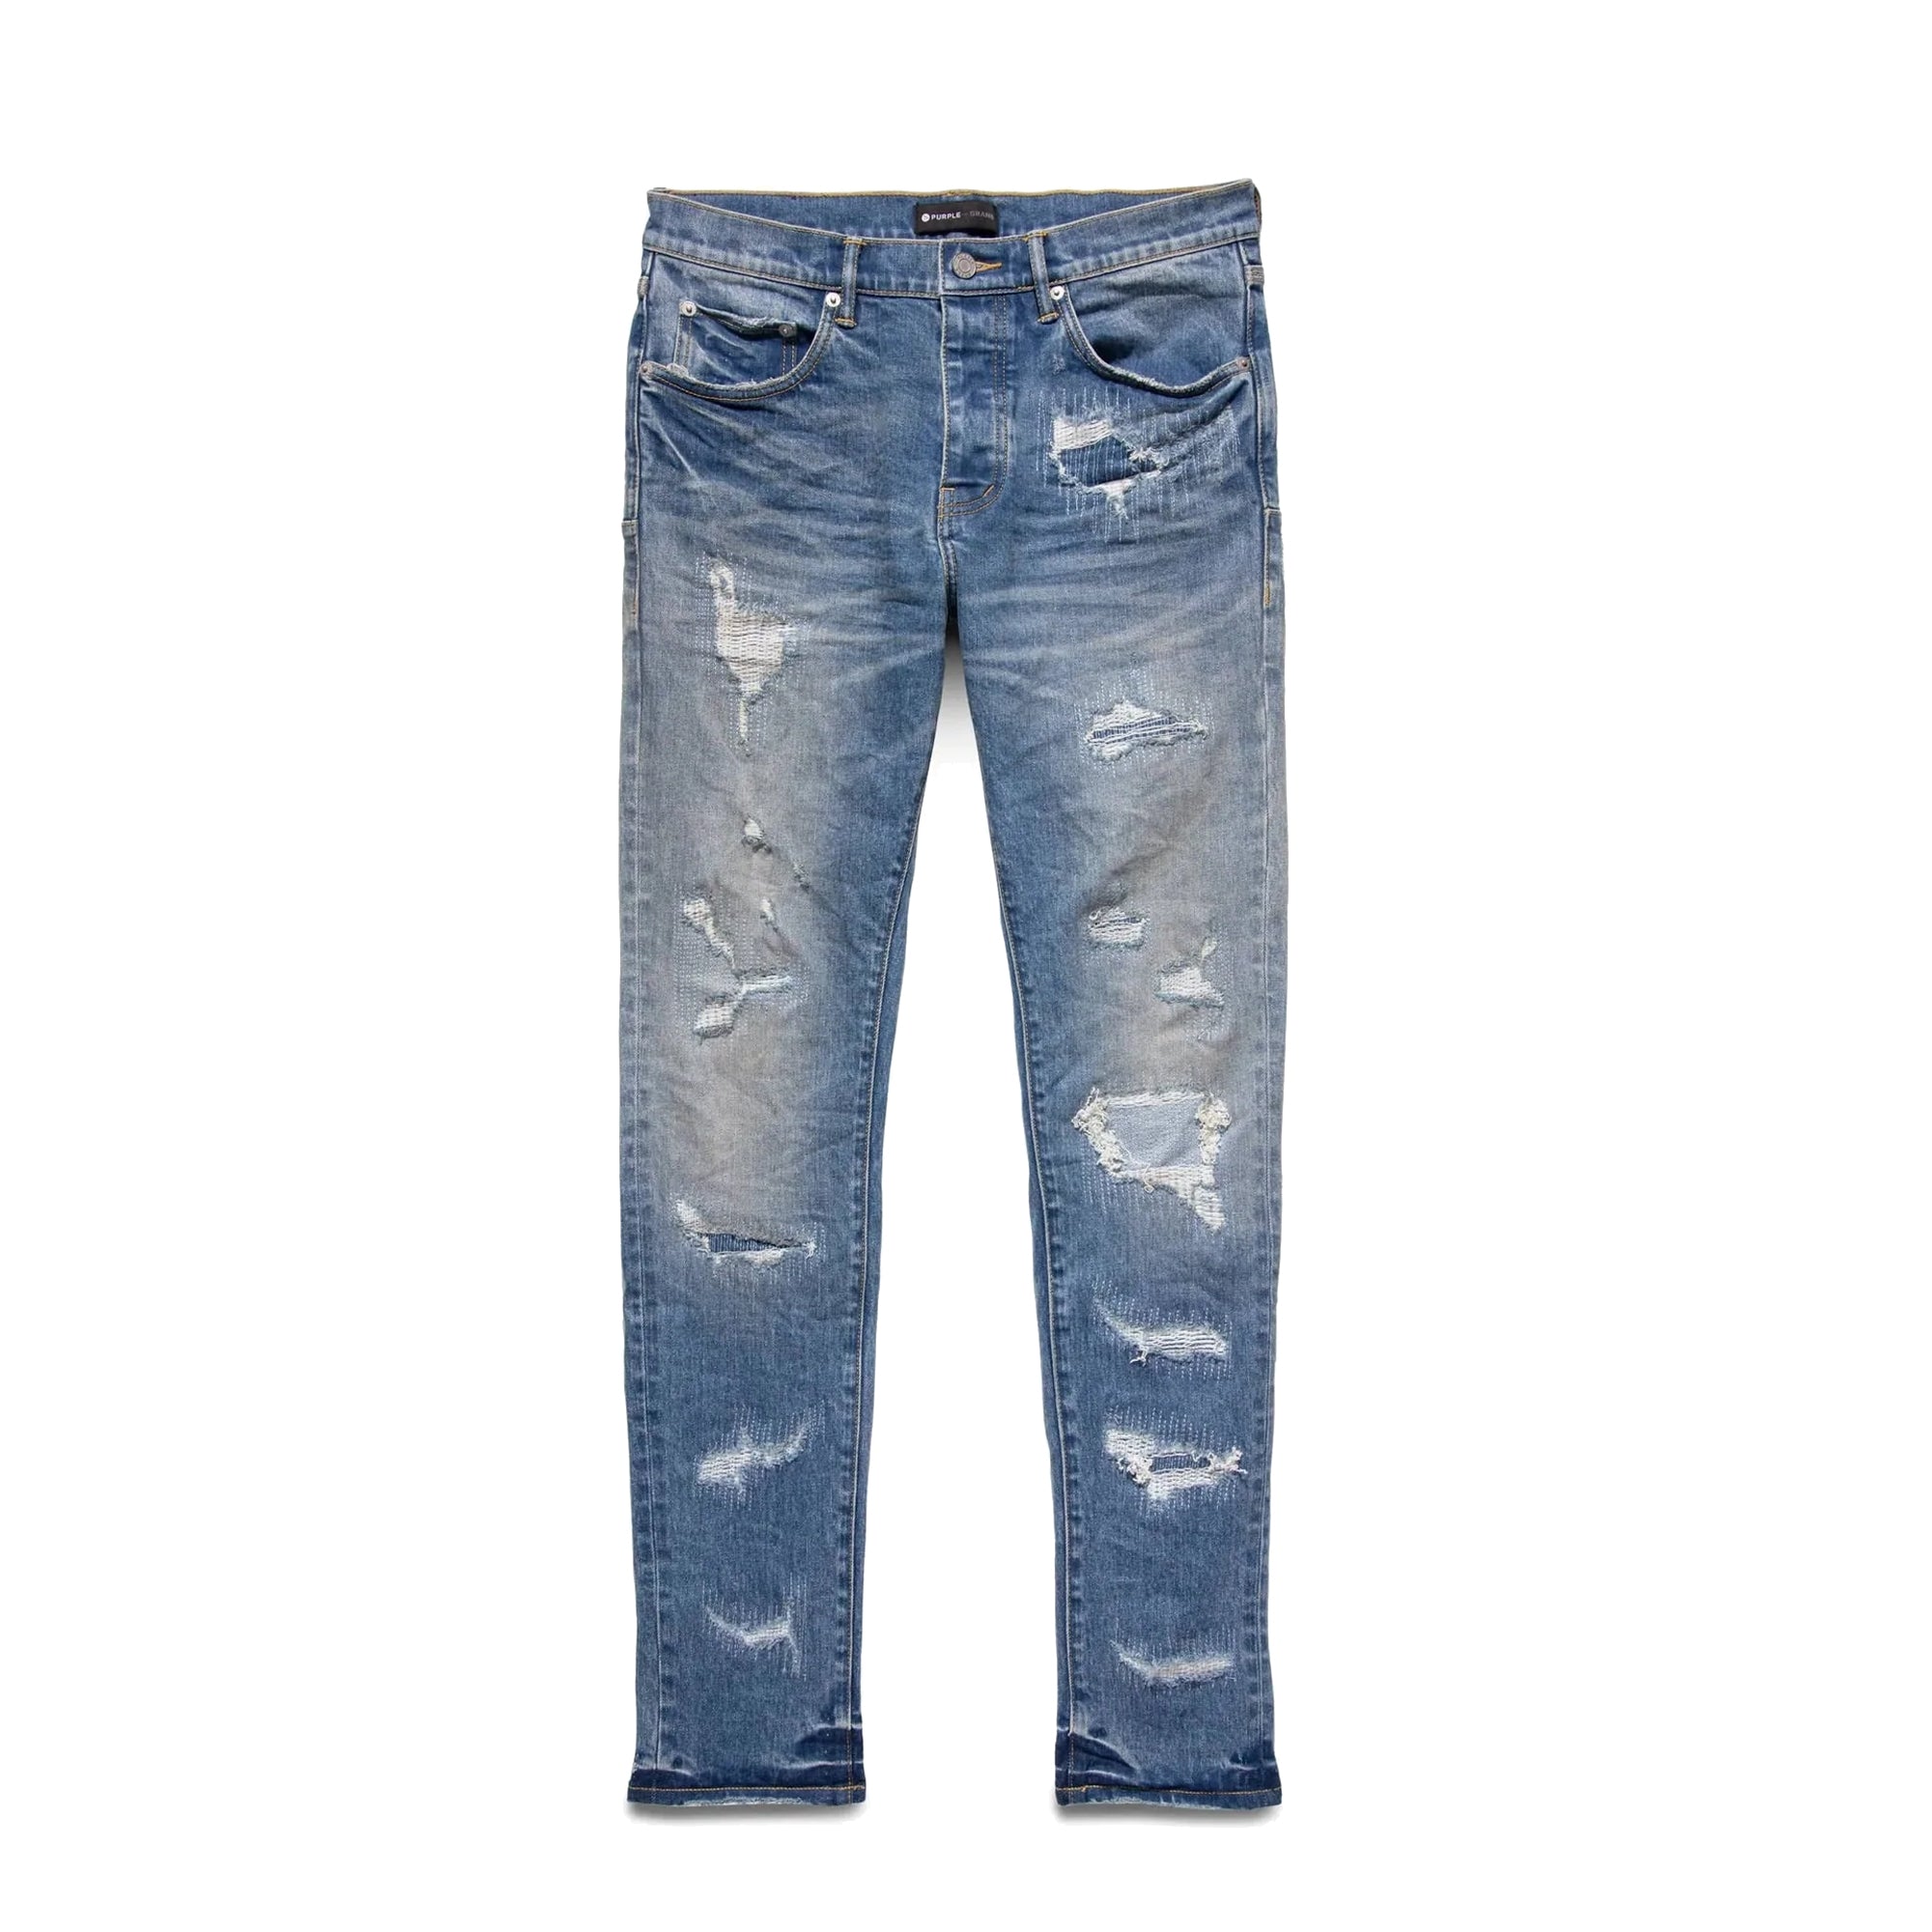 NWT PURPLE BRAND Indigo Oil Repair Skinny Jeans Size 33 $275